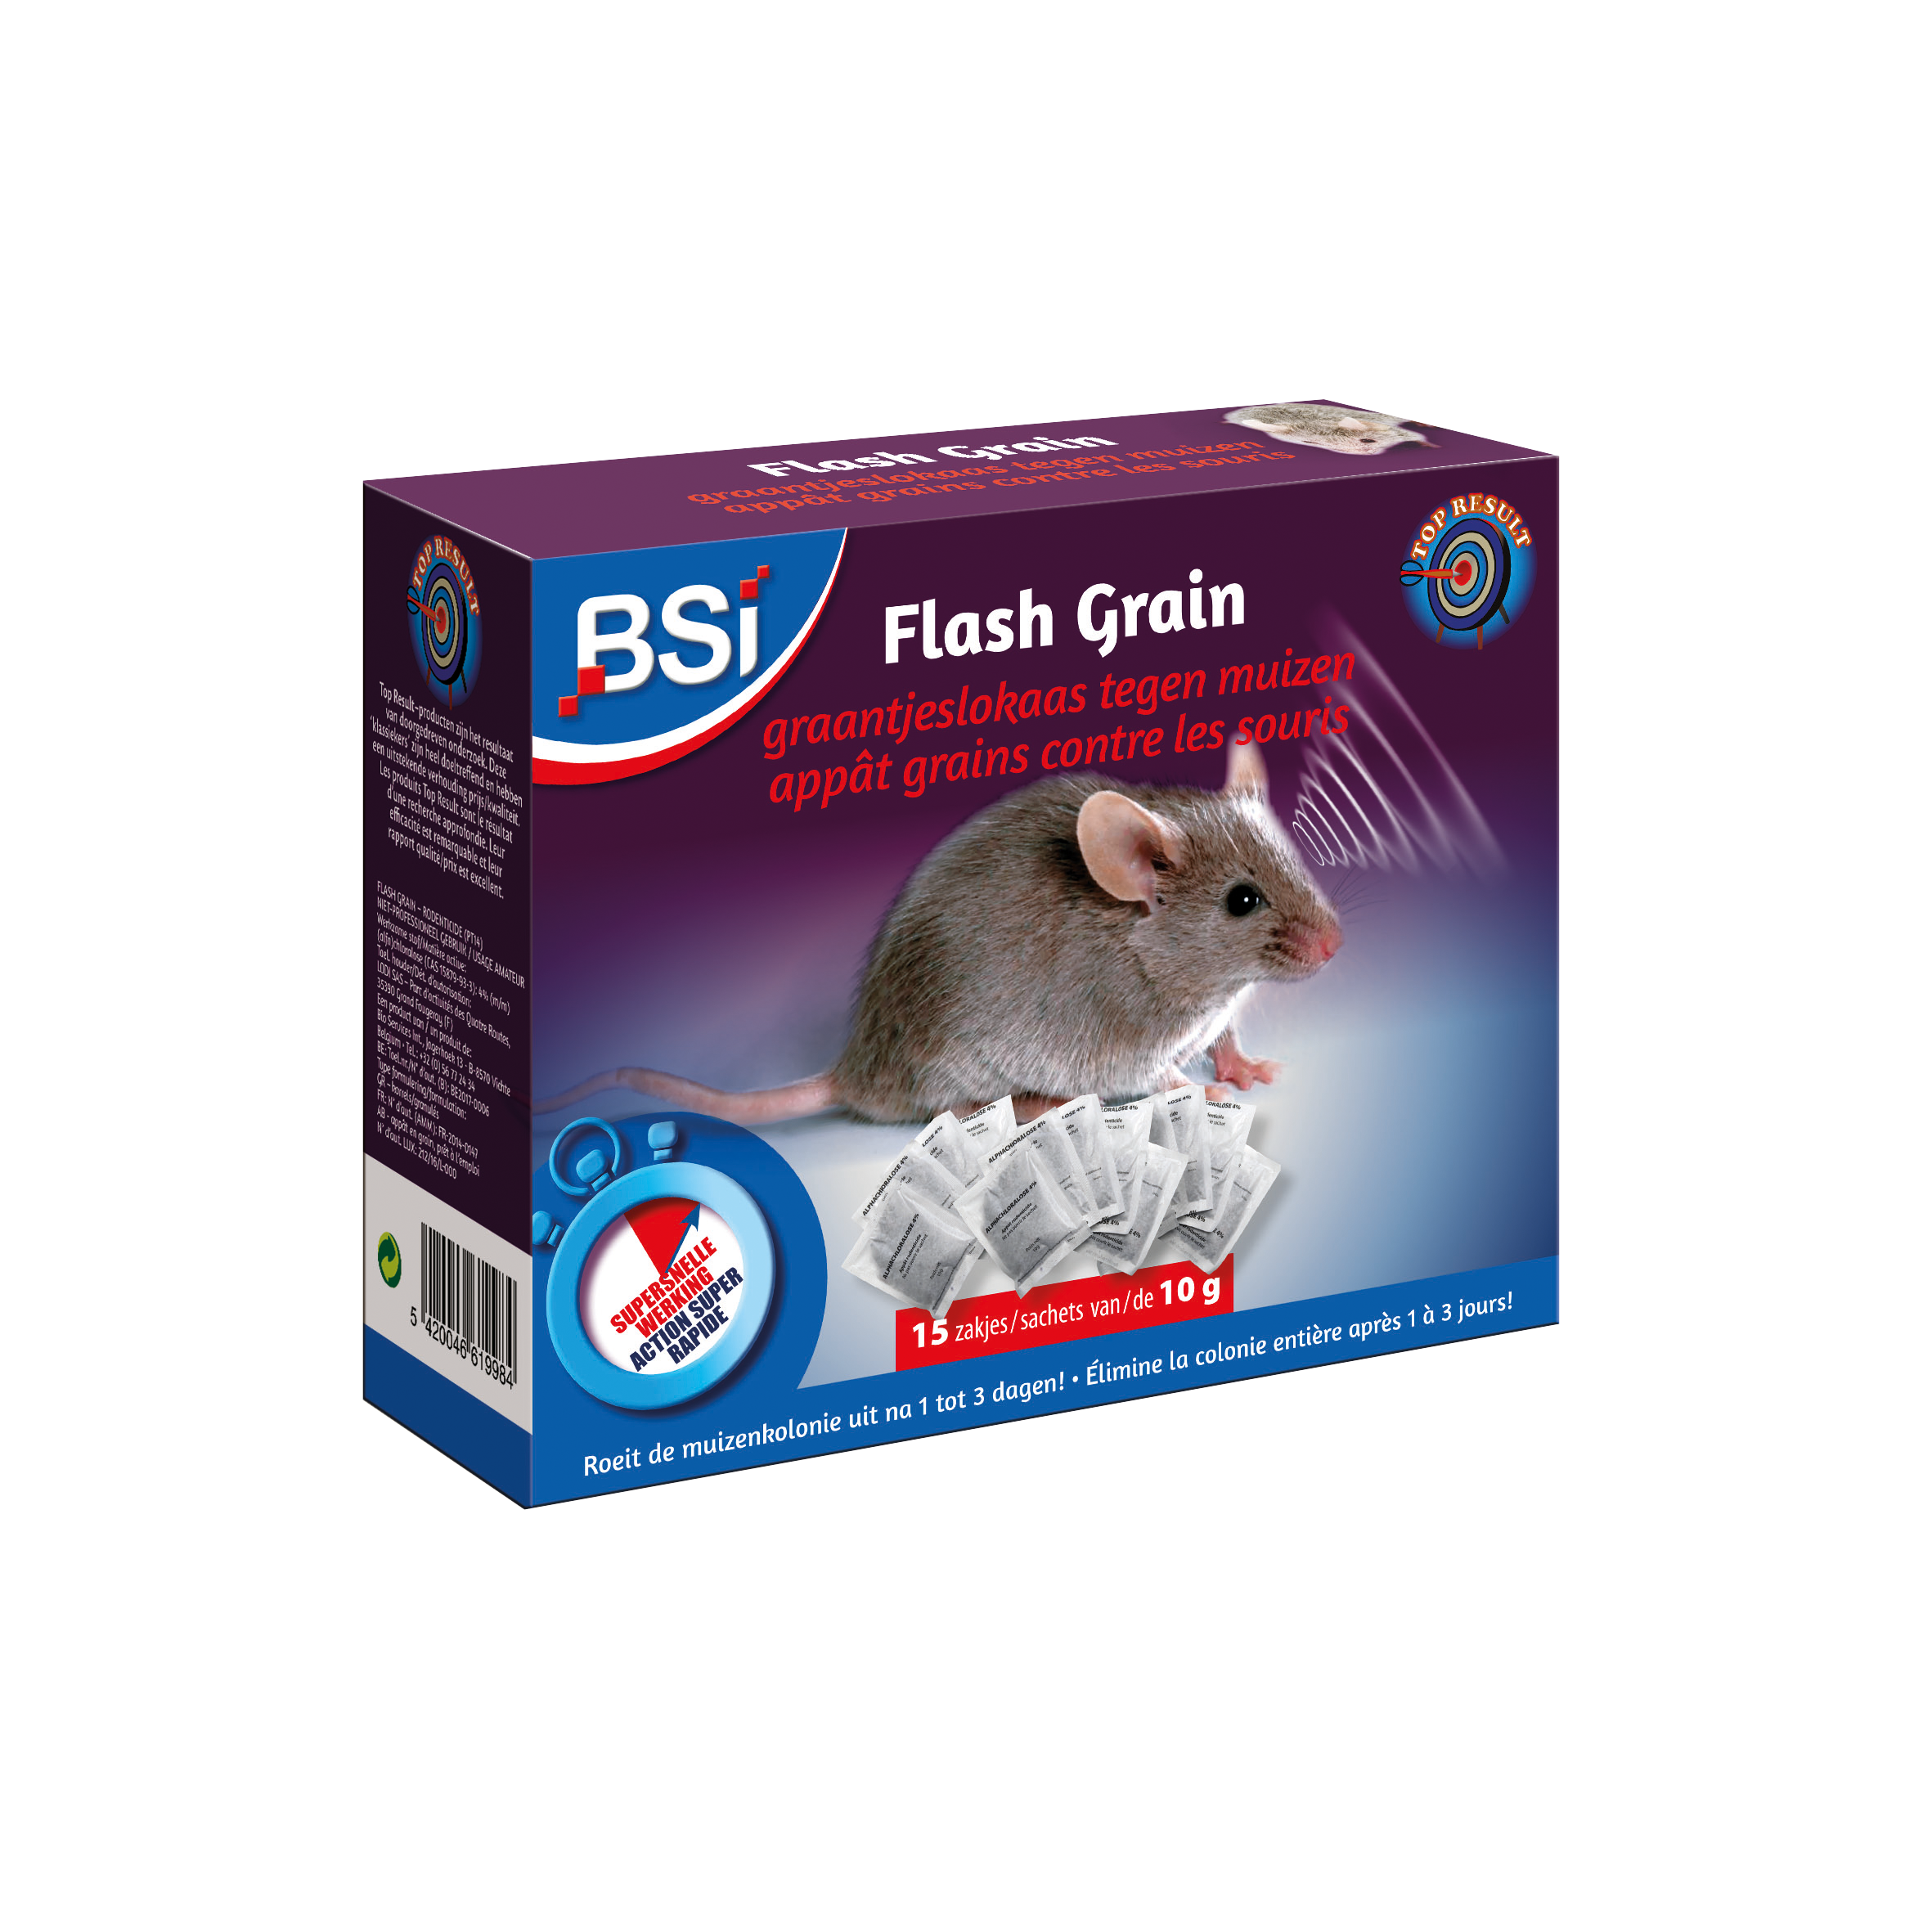 BSI Flash Grain BE/FR/LUX 15 x 10 g image